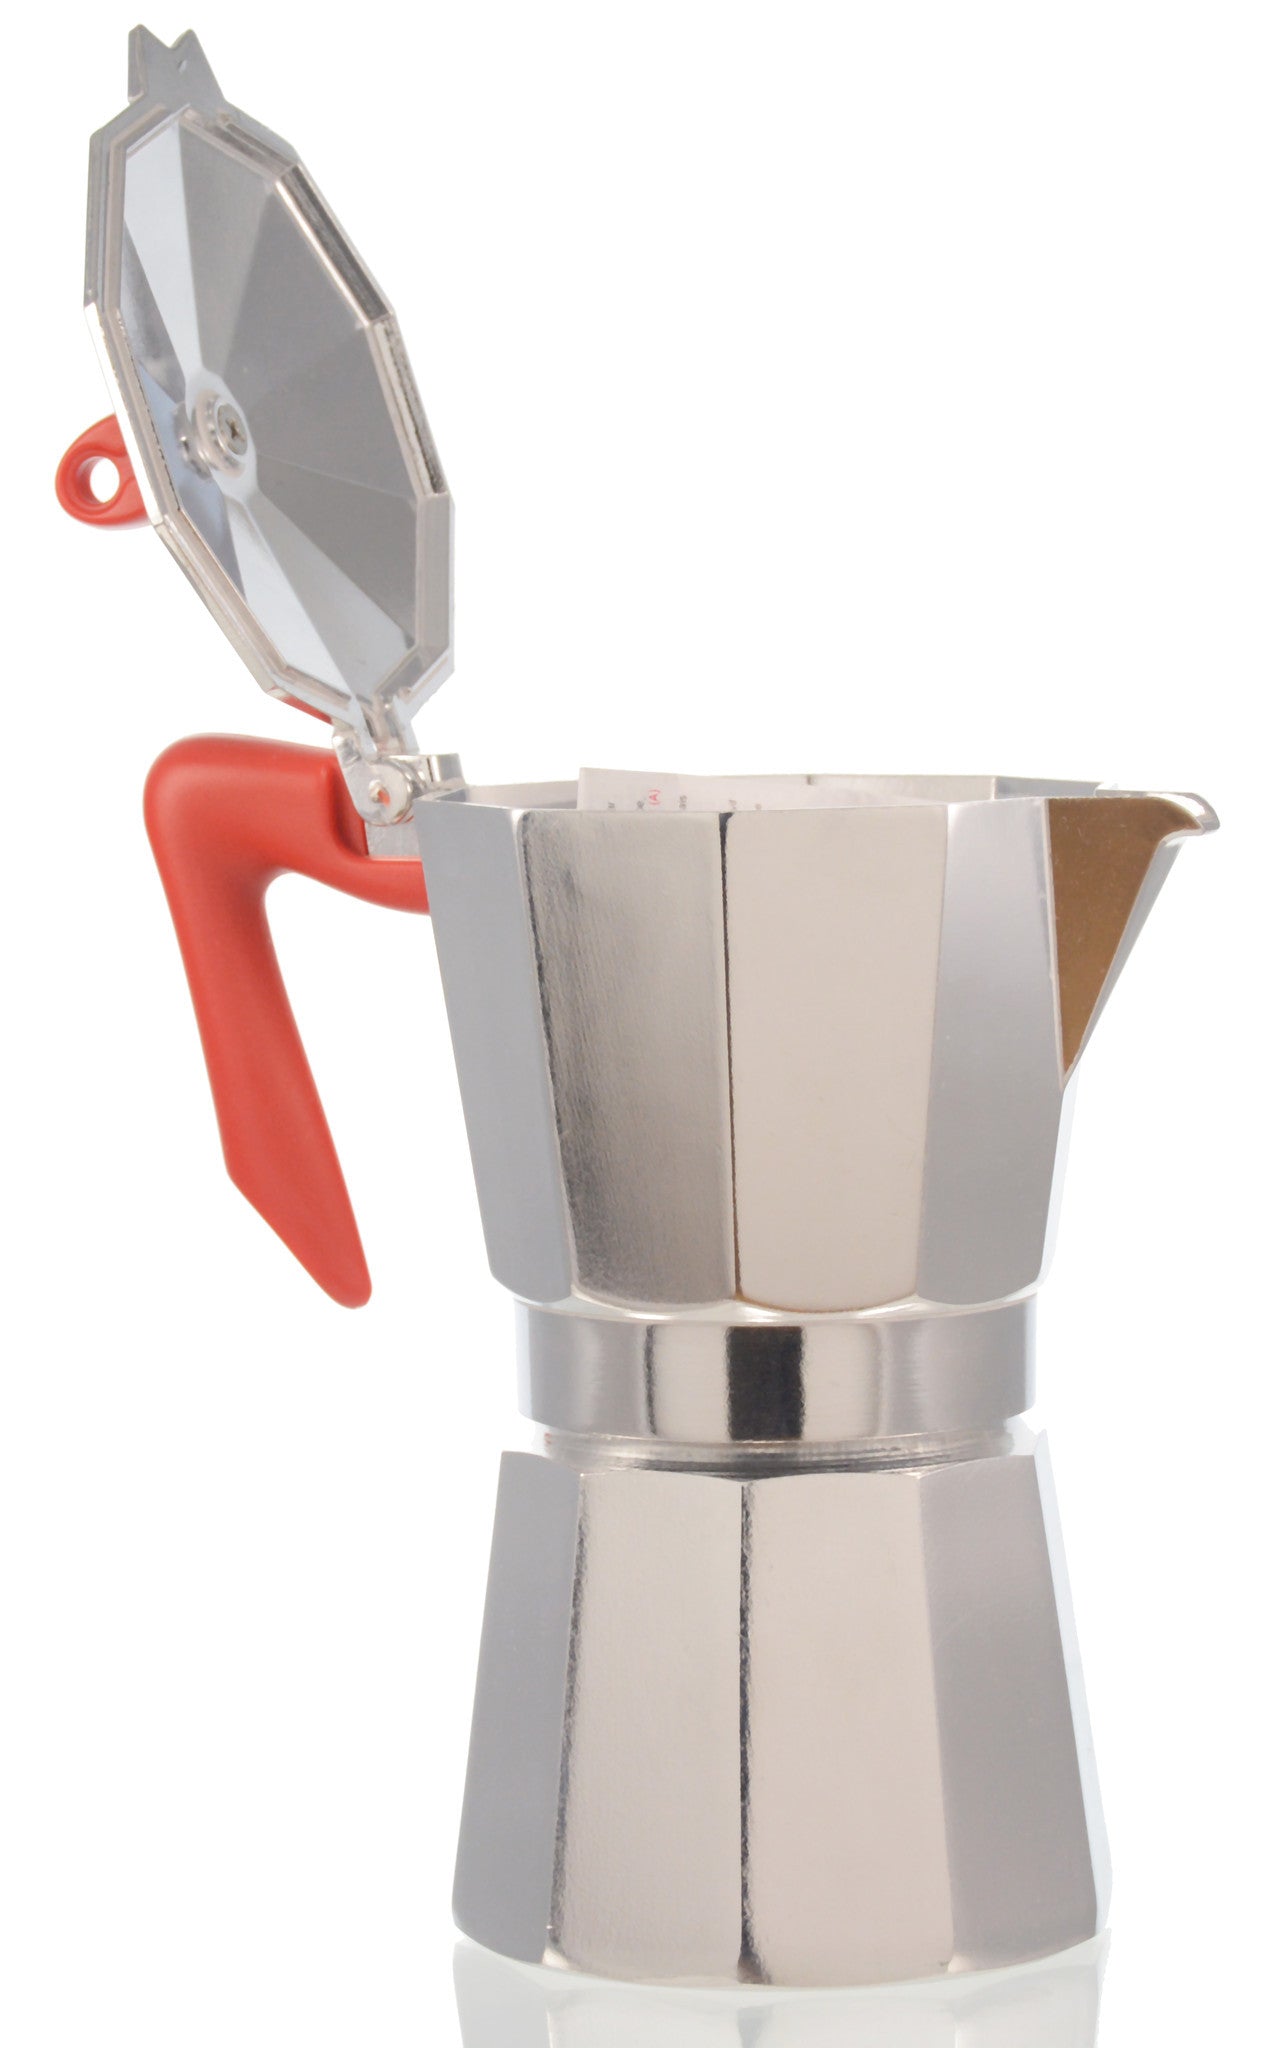 Pedrini - Stainless Steel Moka Espresso Maker – Cerini Coffee & Gifts